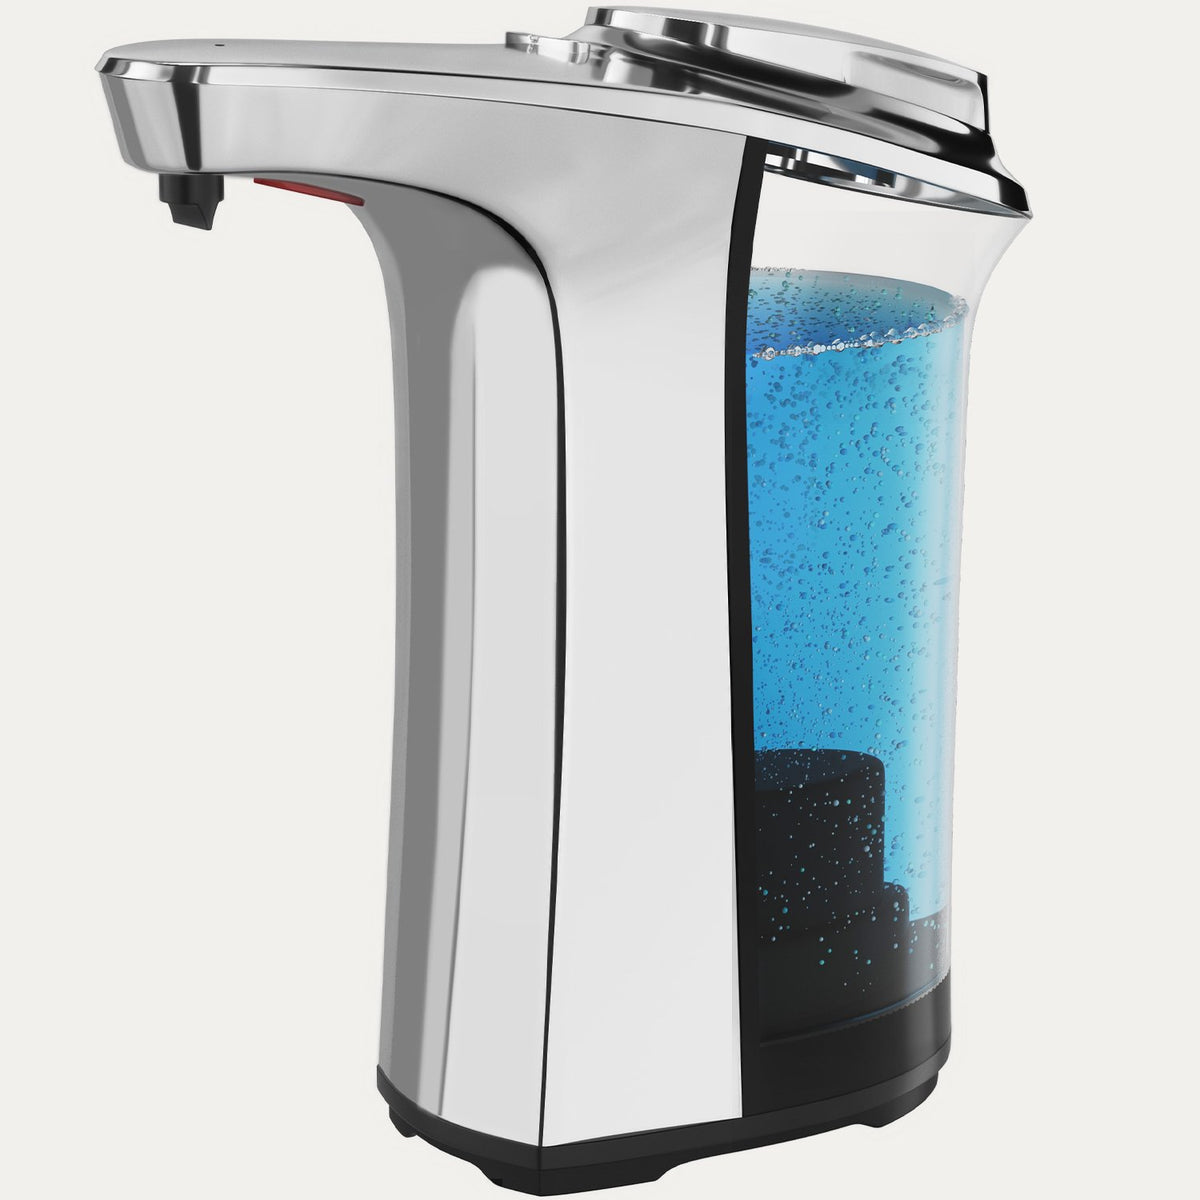 Automatic Soap Dispenser, Touchless Dish Soap Dispenser 17oz/500ml